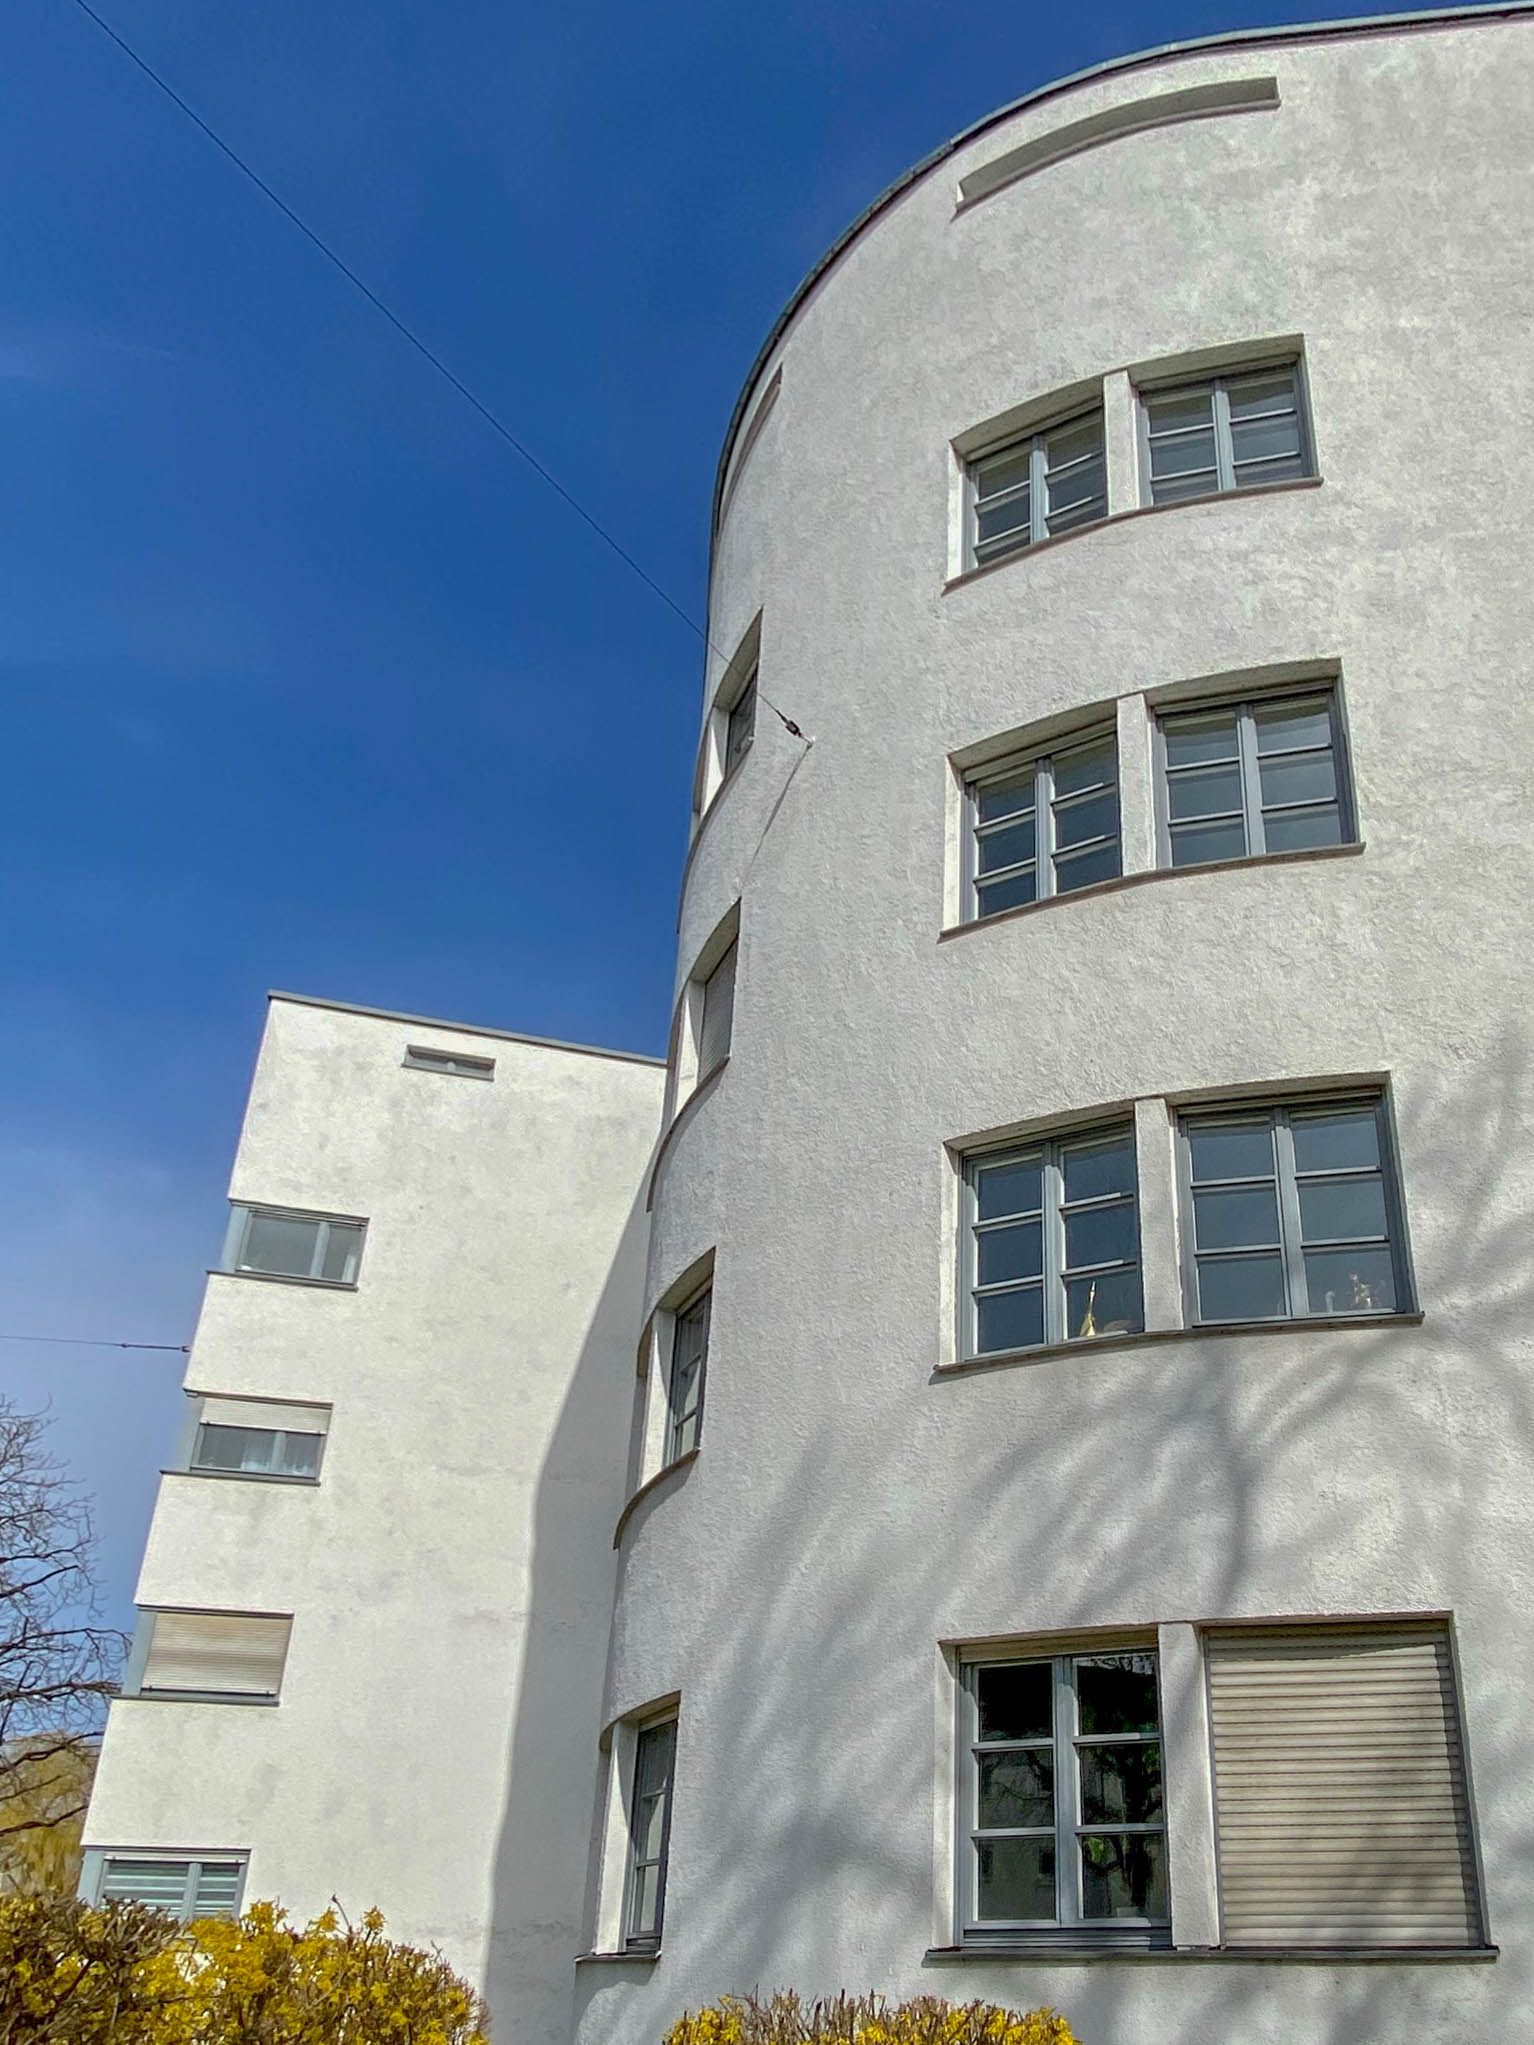 Lessinghof, 1930-1931. Architect: Thomas Wechs. Photo: Daniela Christmann